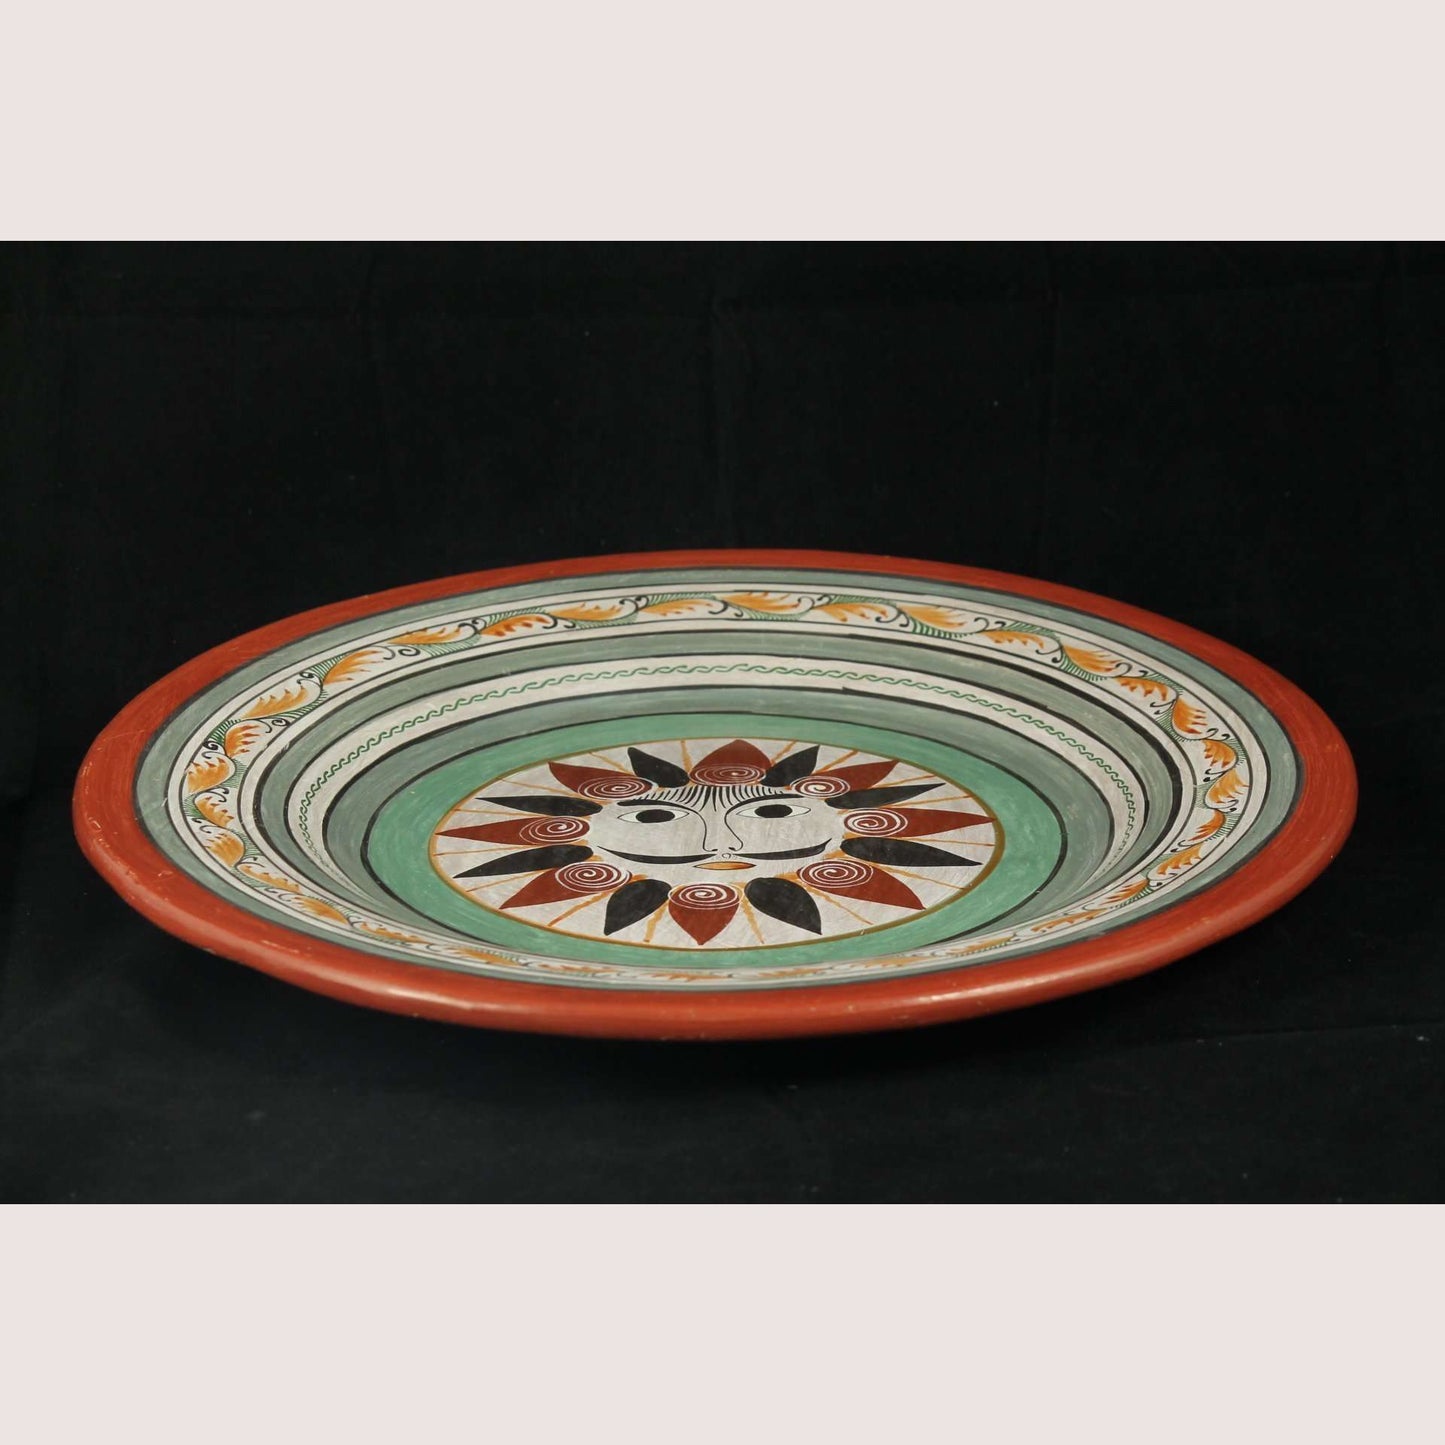 Vintage Sun Large Mexican Ceramic Hanging Plate Folk Art